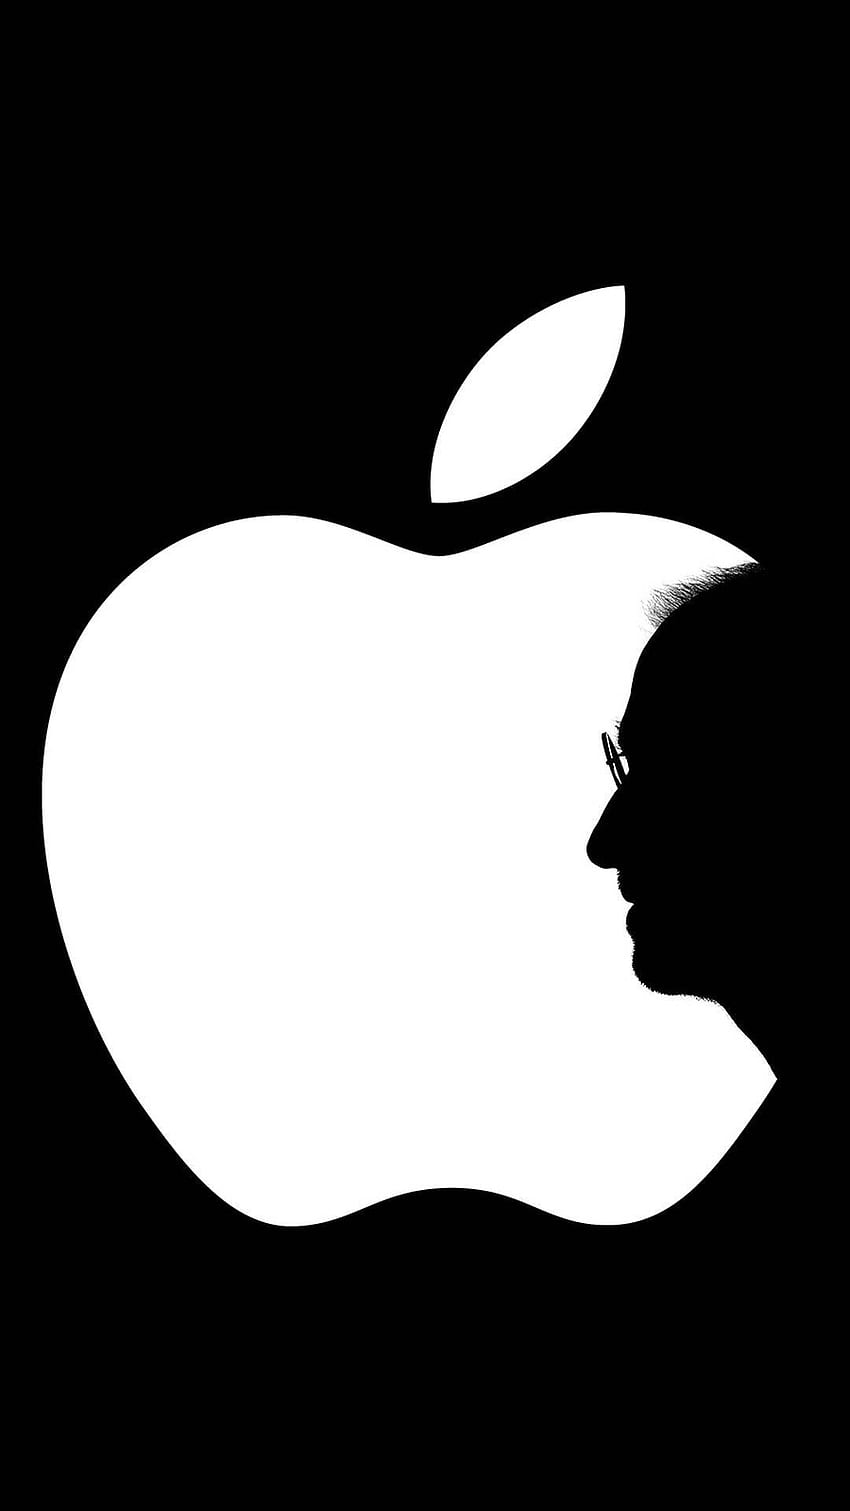 Steve Jobs tribute for iPhone 6 and iPhone 6 Plus, Steve Jobs Apple HD phone wallpaper